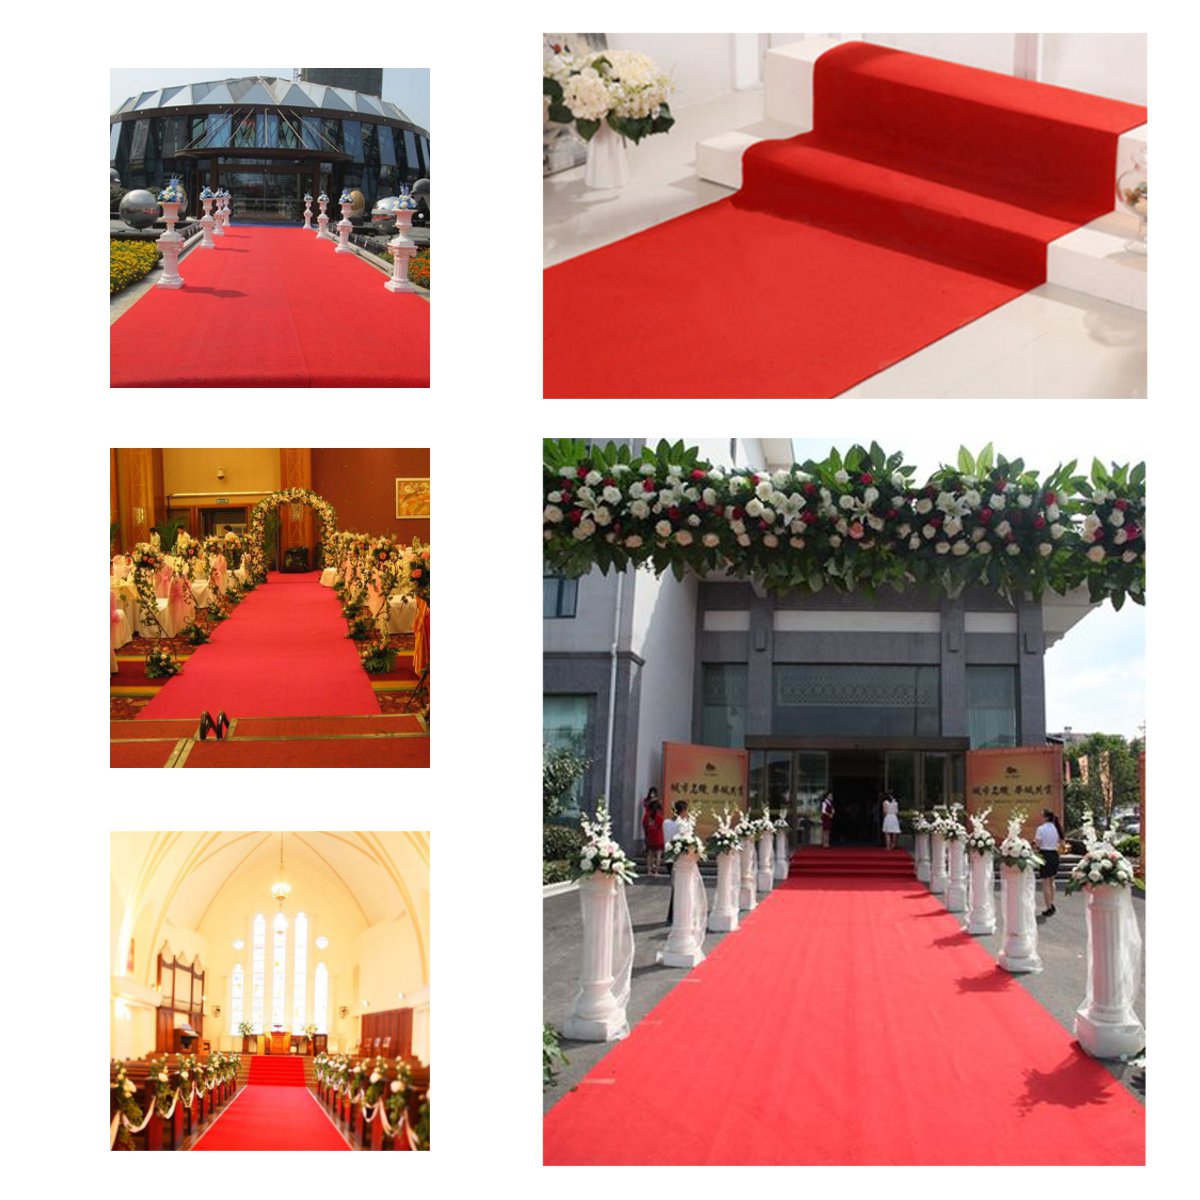 1215m-Large-Long-Red-Carpet-Wedding-Aisle-Floor-Mat-Runner-Party-Birthday-Decoration-1440607-6